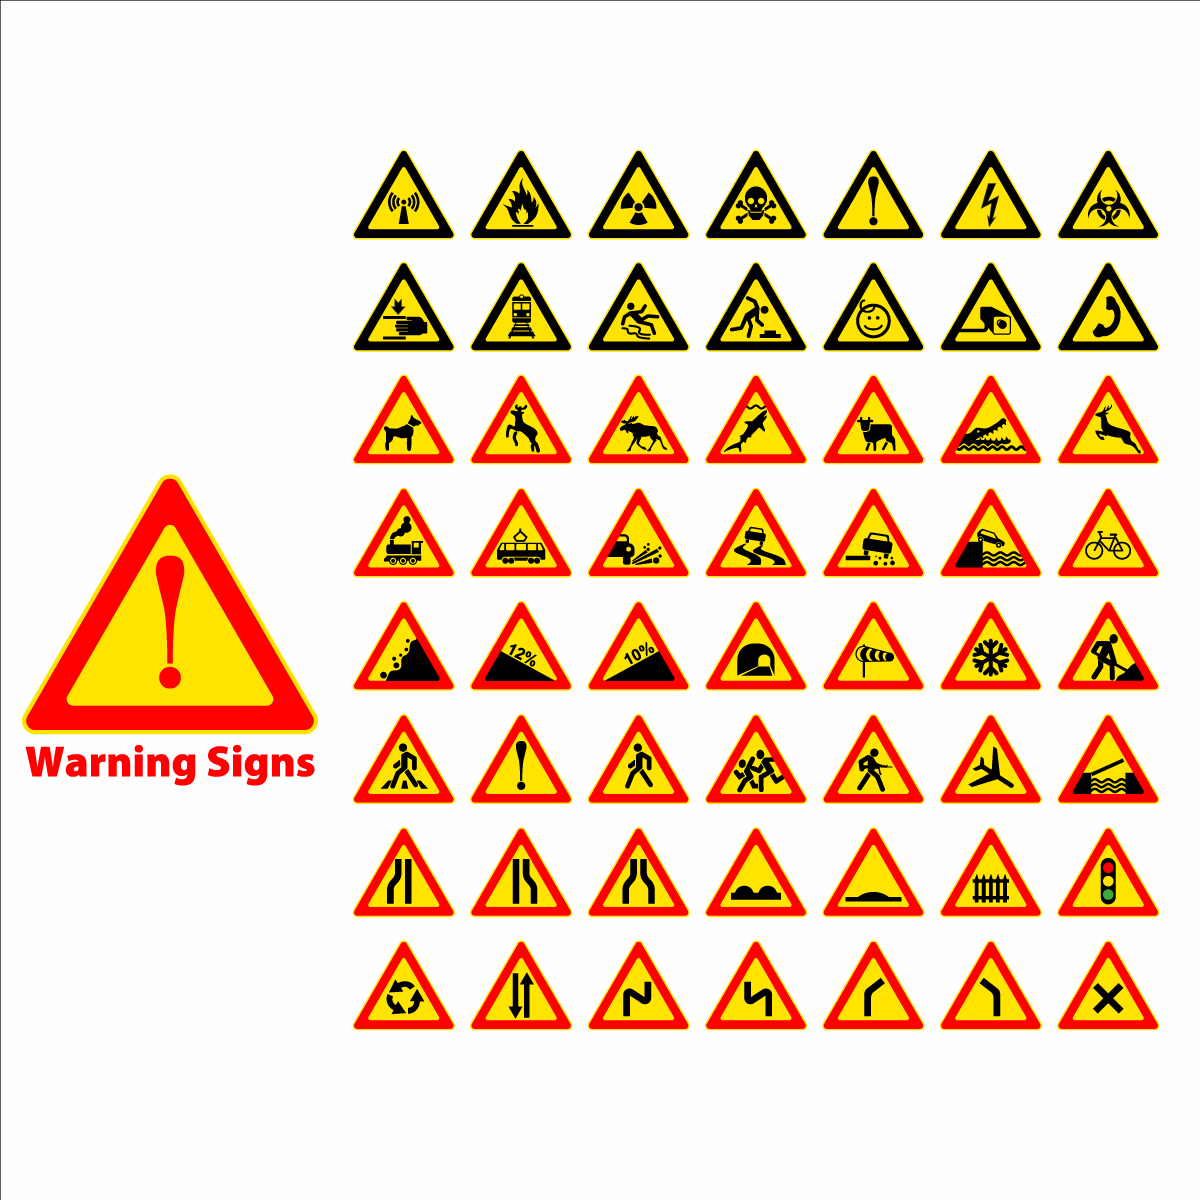 3. Warning pictograms.